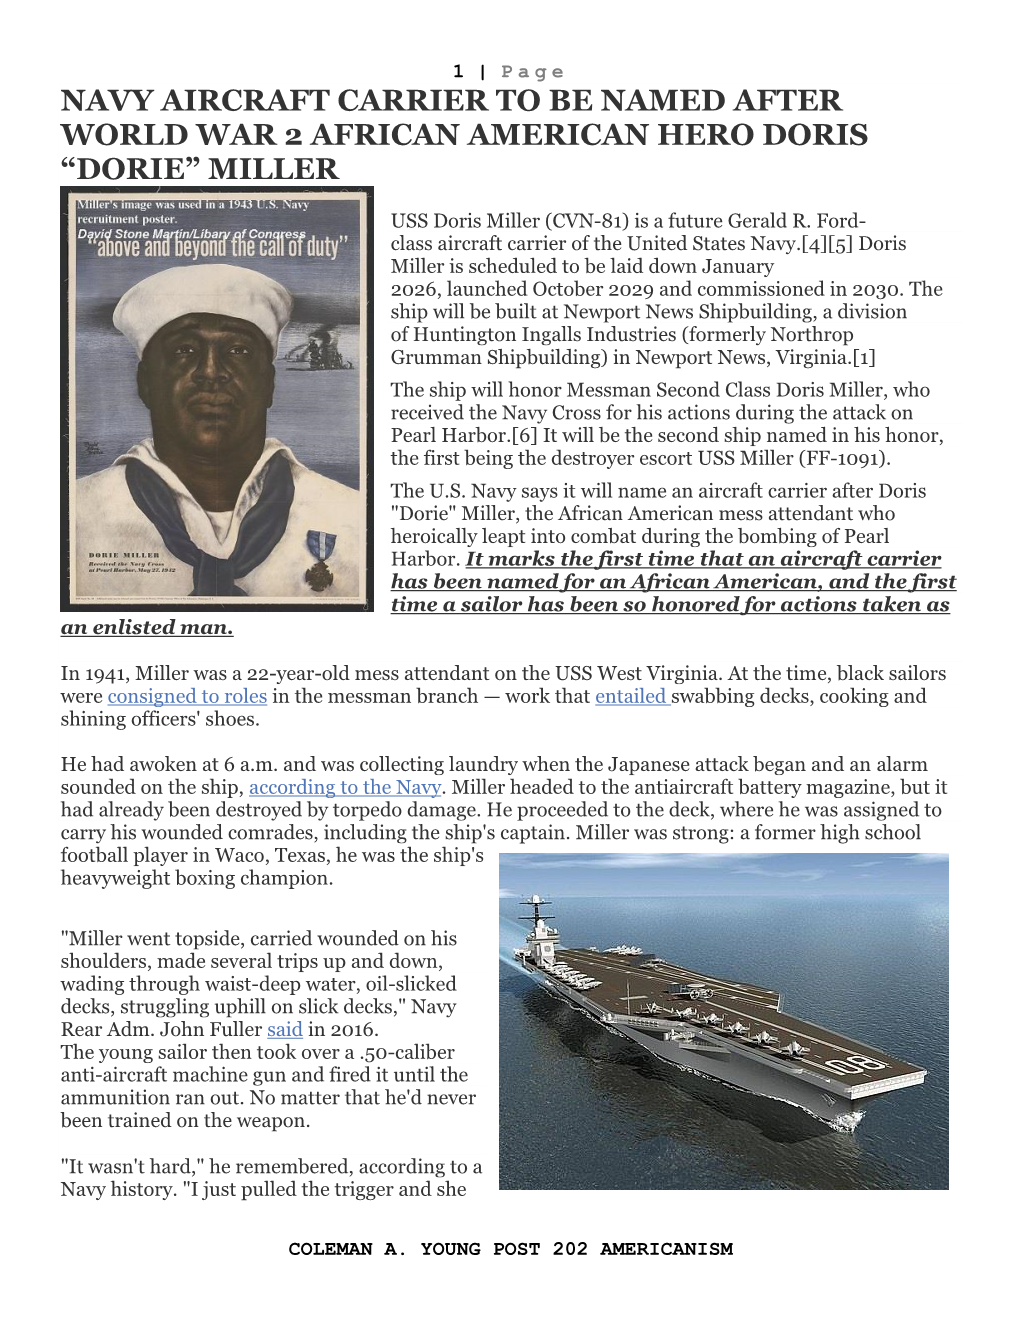 Navy Aircraft Carrier to Be Named After World War 2 African American Hero Doris “Dorie” Miller